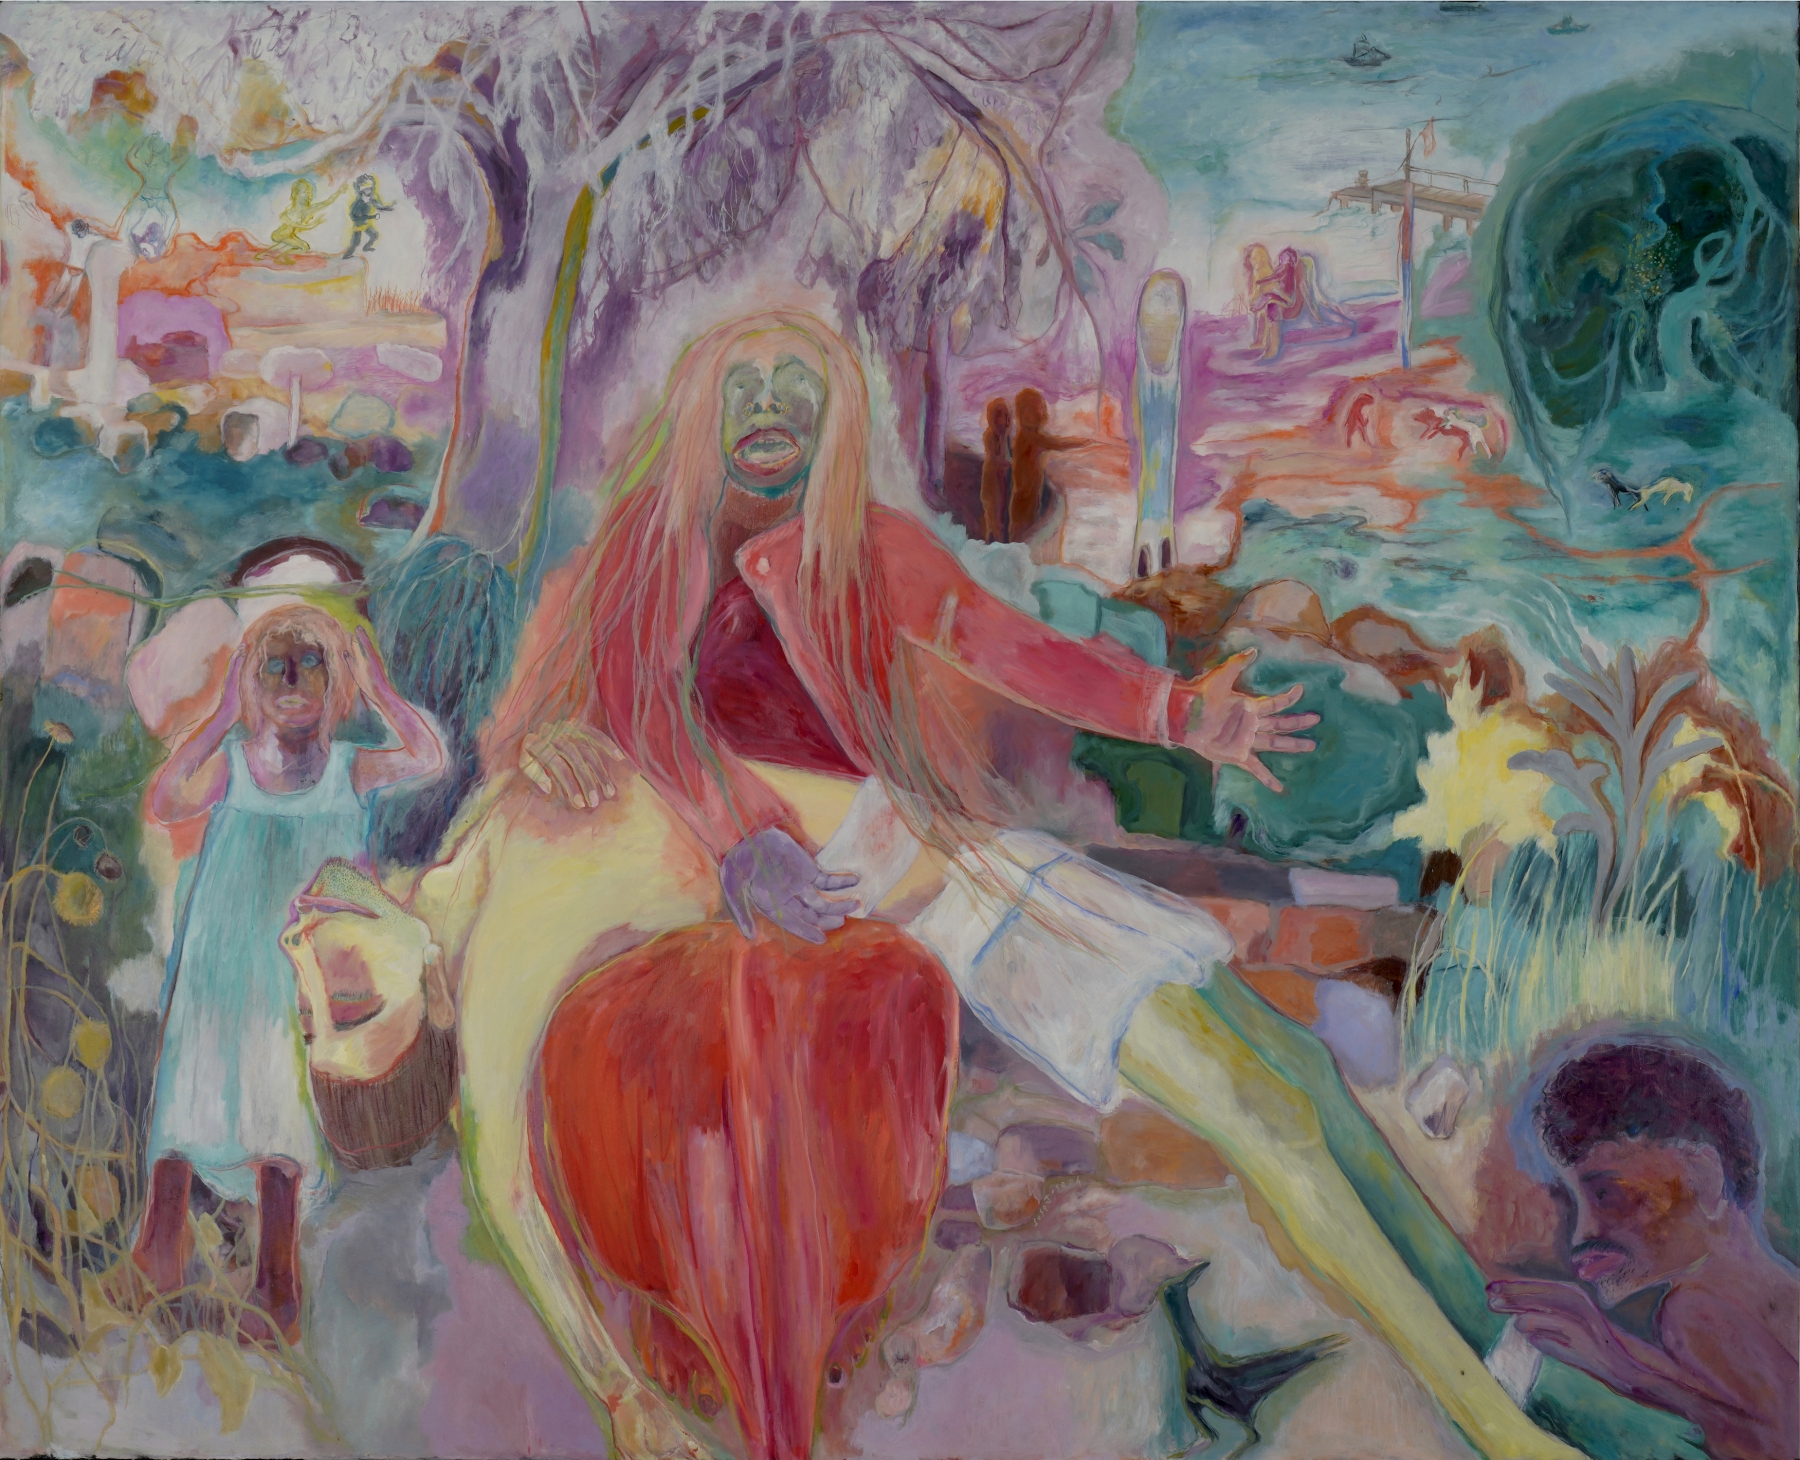 SOSA JOSEPH, Pieta, 2020, oil on canvas, 68 x 84 in / 172.7 x 213.3 cm&amp;nbsp;